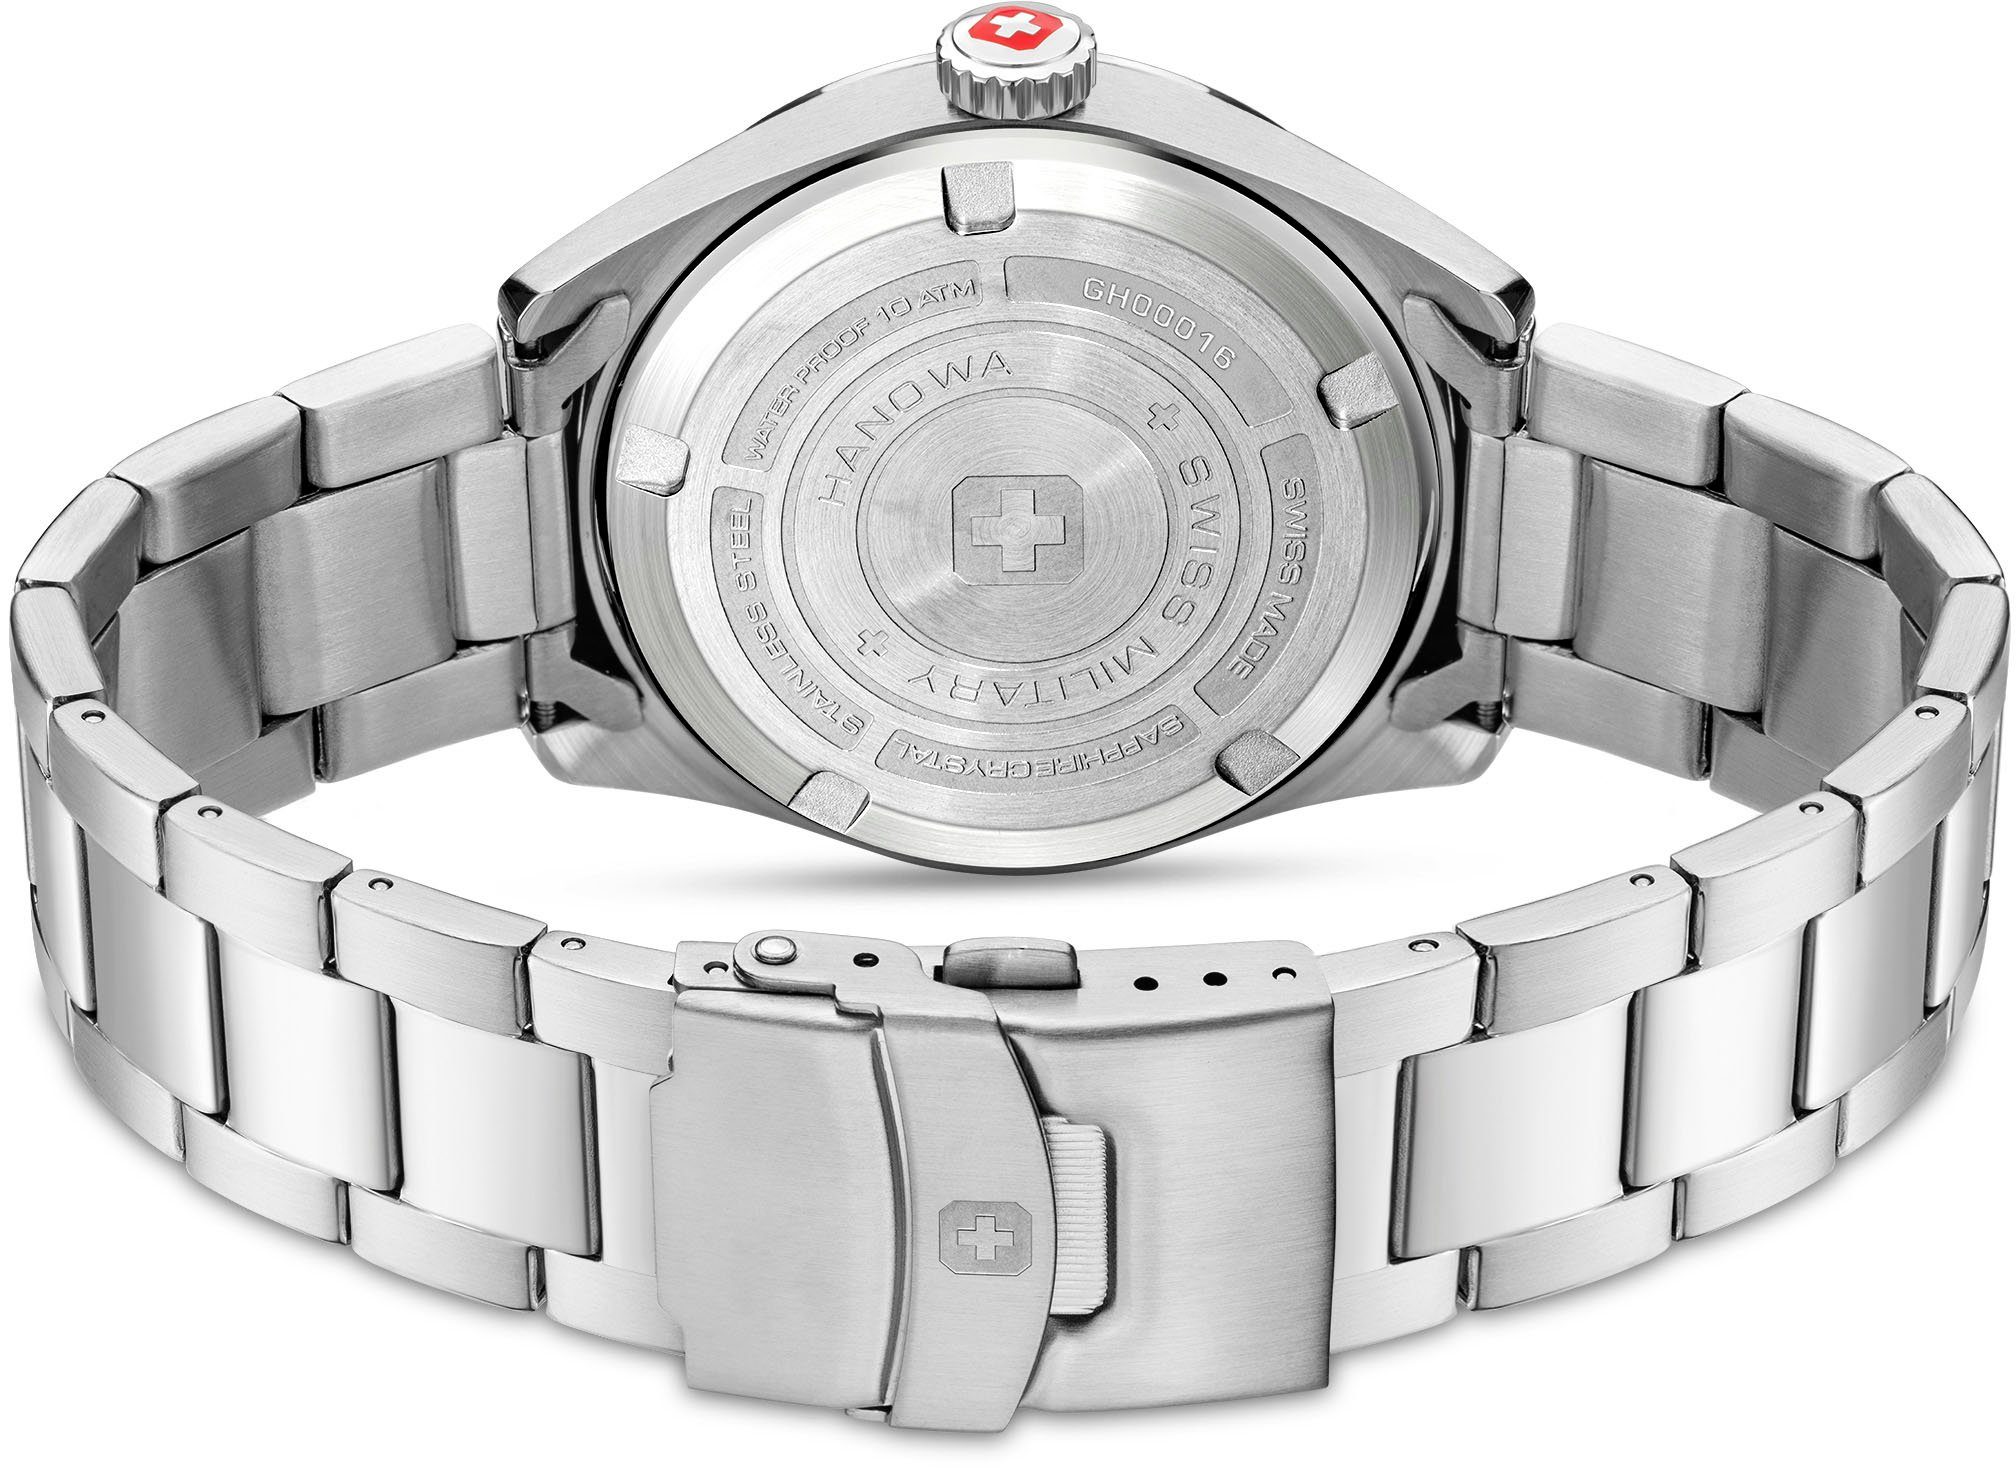 Uhr Schweizer Hanowa MAXED, ROADRUNNER SMWGH0001601 Swiss Military